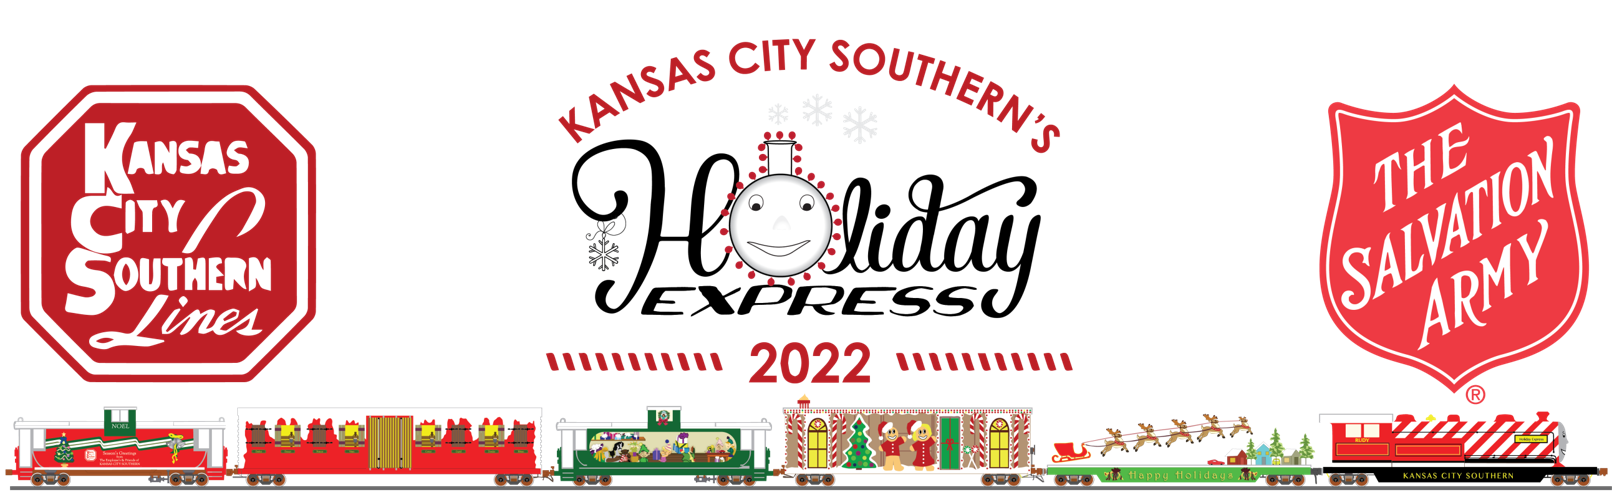 Kansas City Southern Holiday Express returns after 2 year break